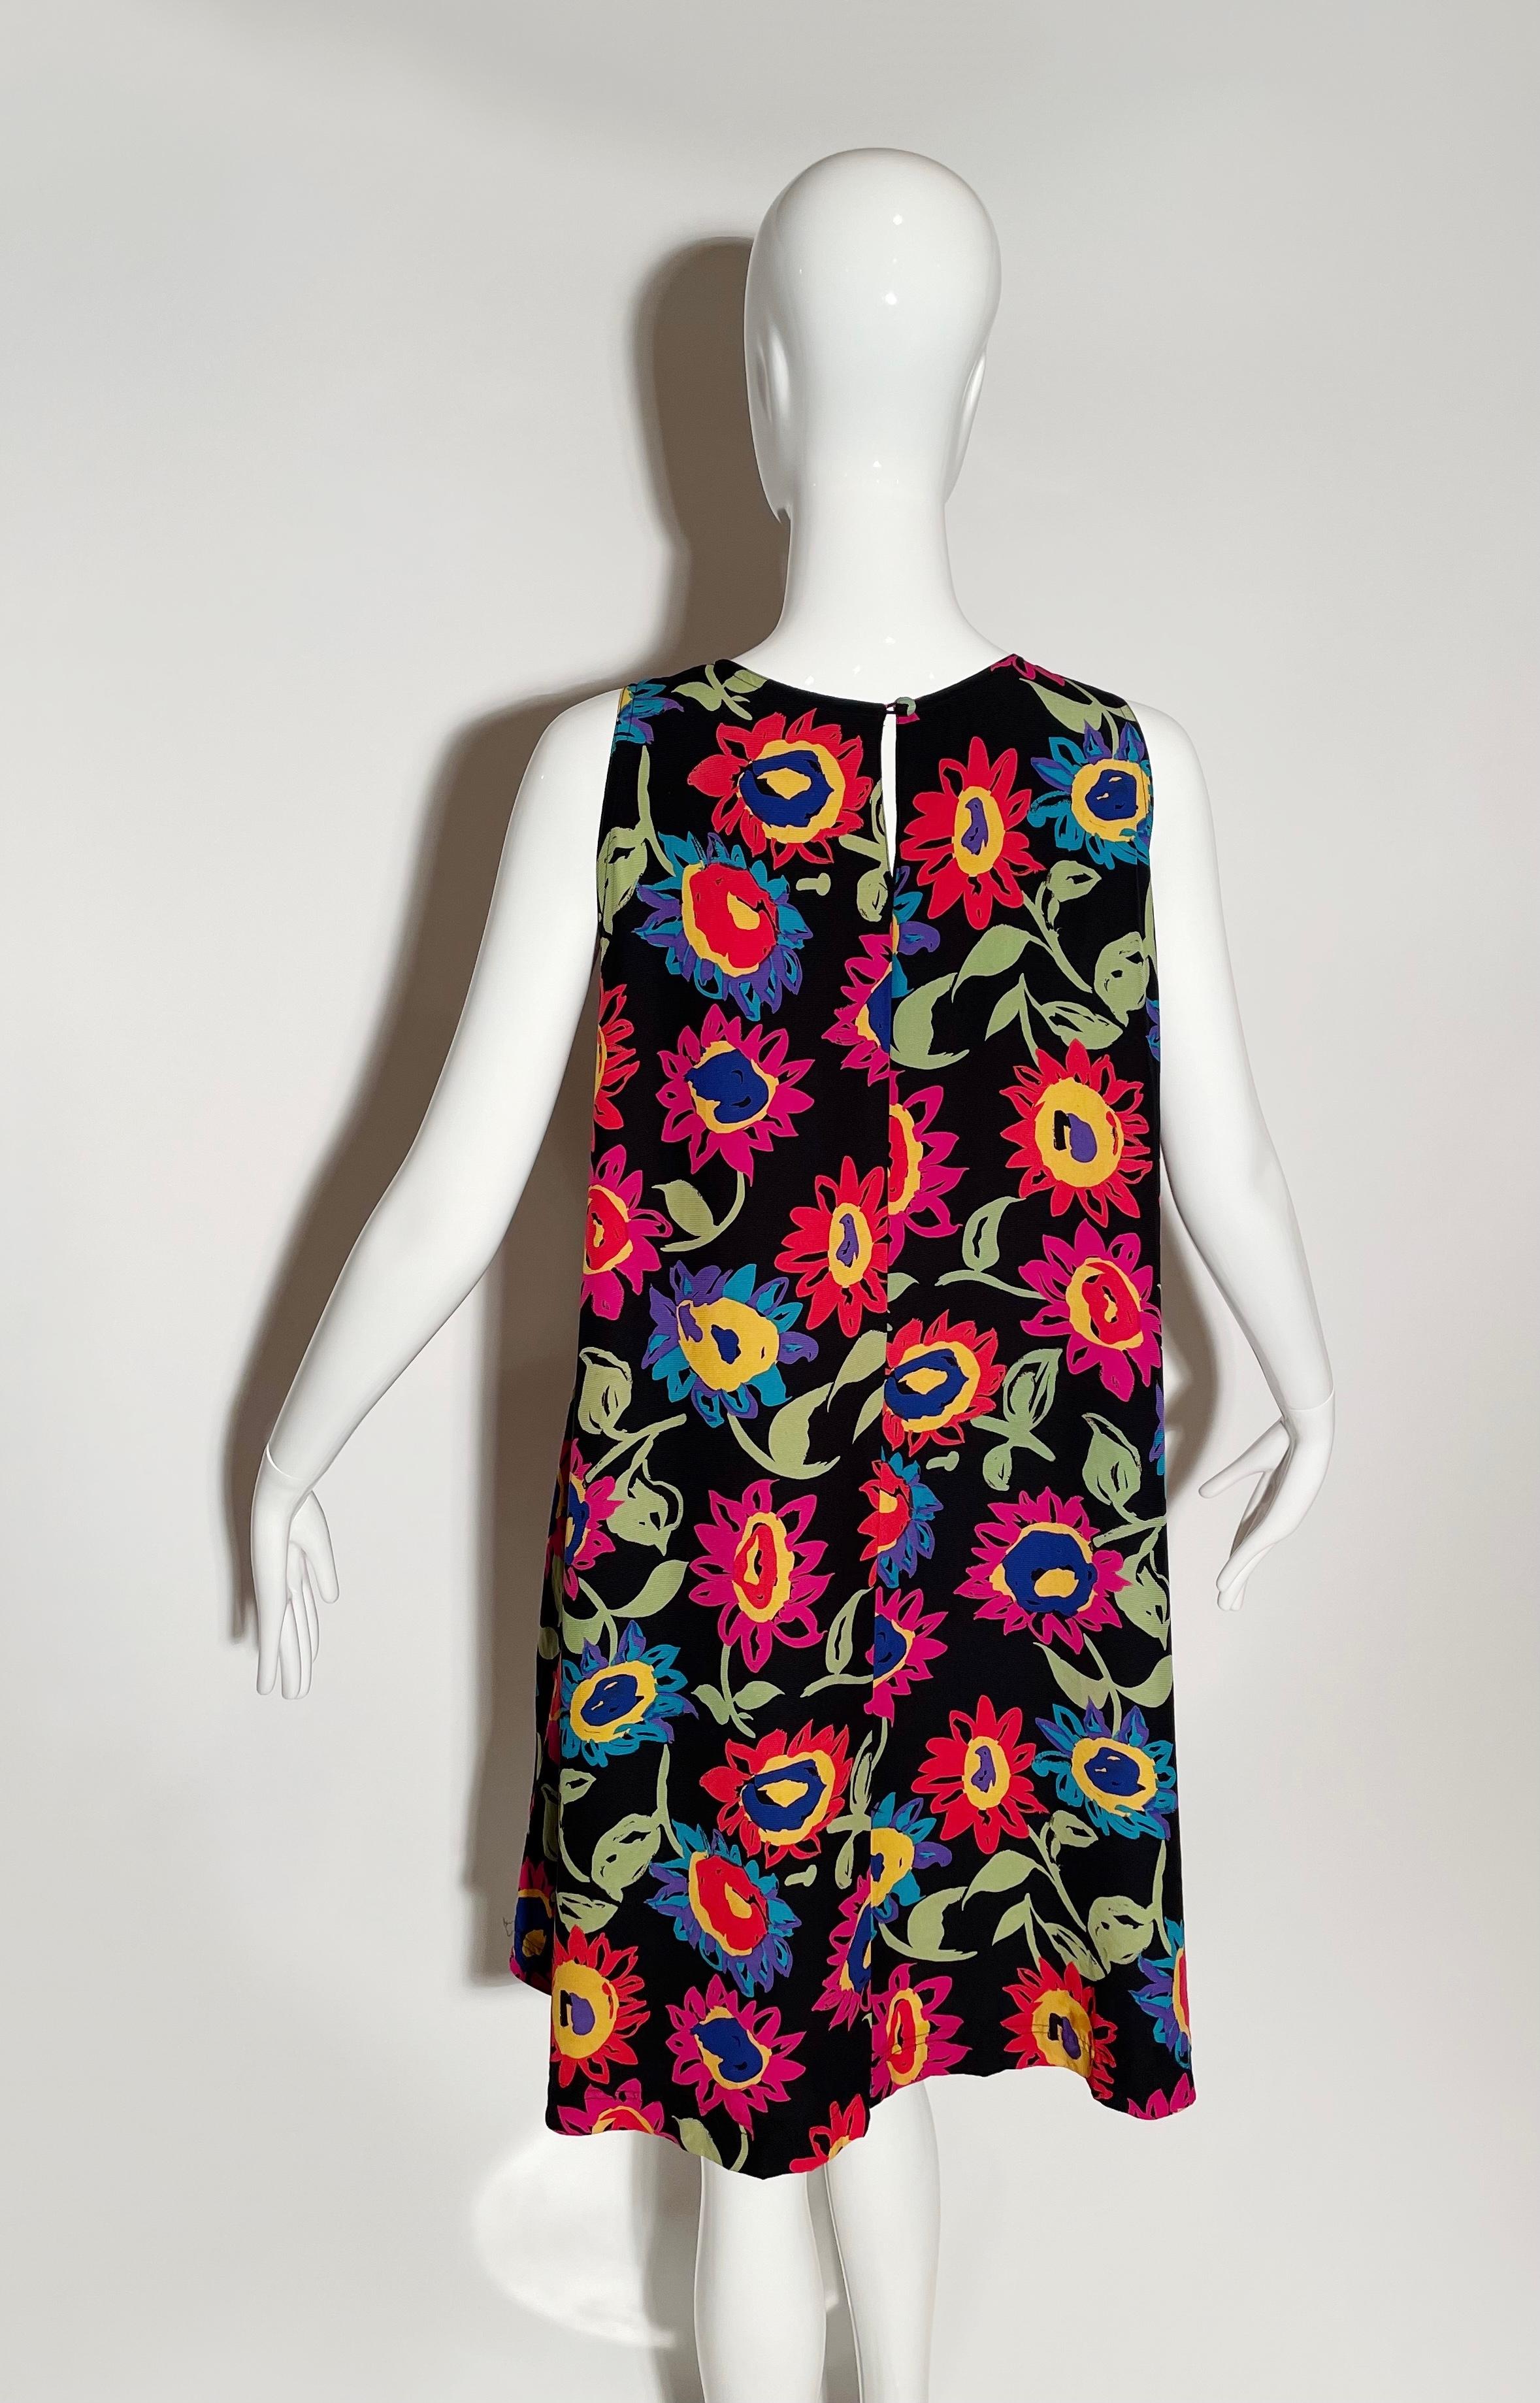 Emanuel Ungaro Silk Floral Dress In Fair Condition For Sale In Los Angeles, CA